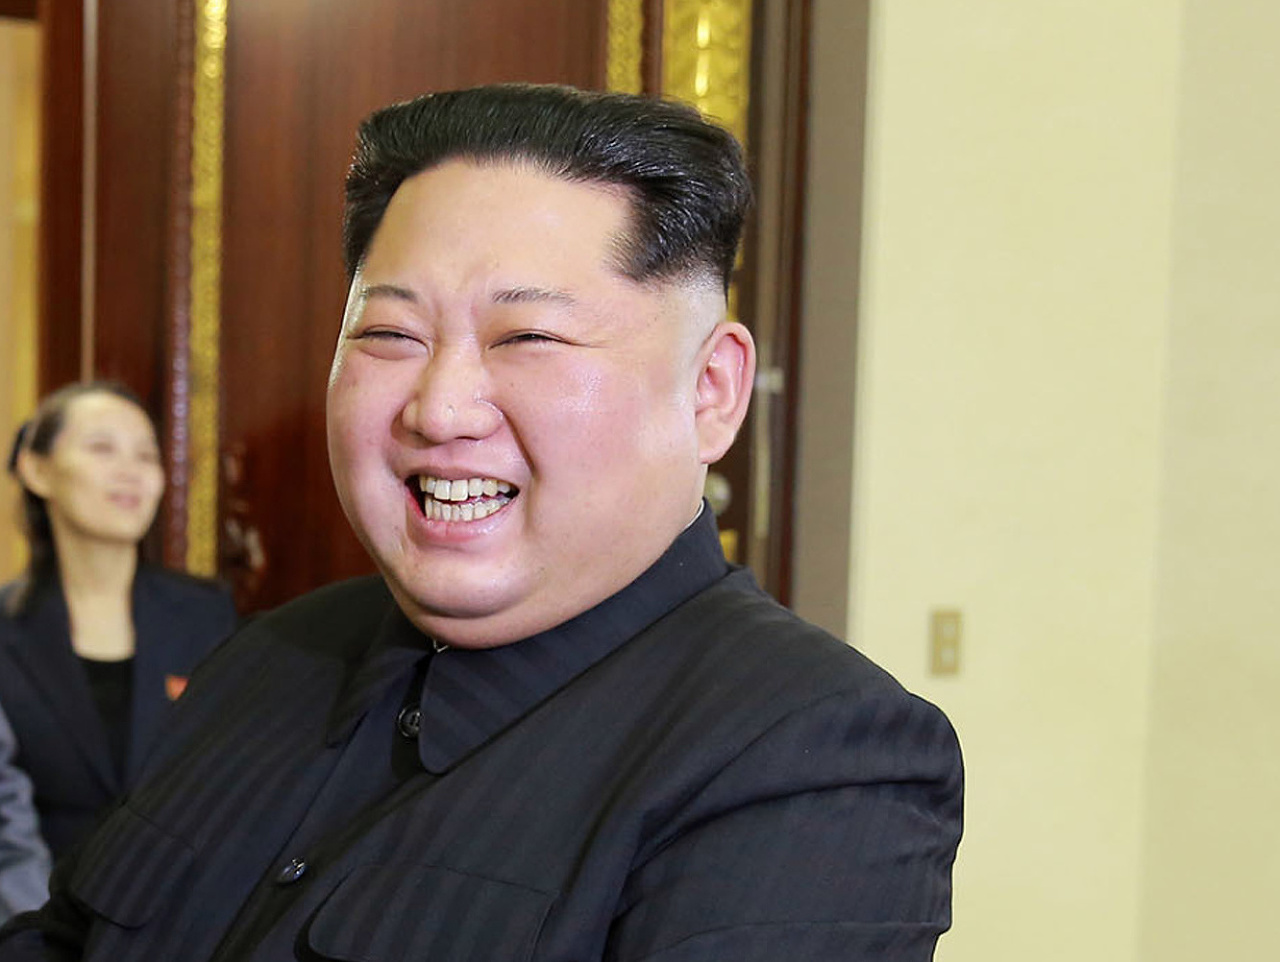 Čong Ji-jong dosiahlol vraj s Kim Čong-unom dohodu.